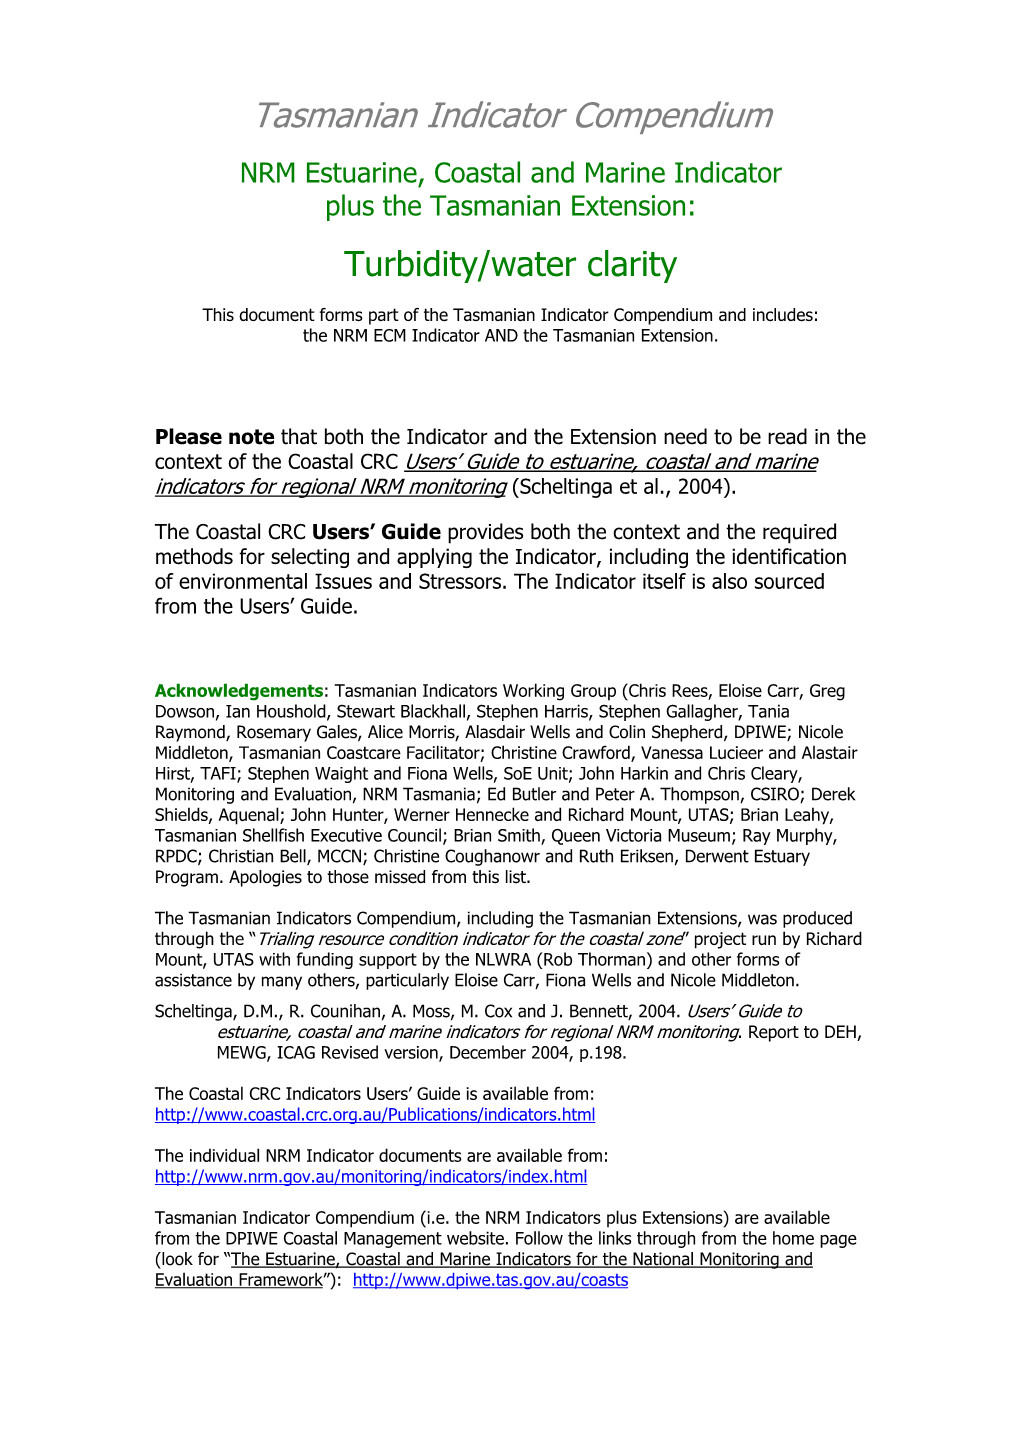 Tasmanian Indicator Compendium NRM Estuarine, Coastal and Marine Indicator Plus the Tasmanian Extension: Turbidity/Water Clarity